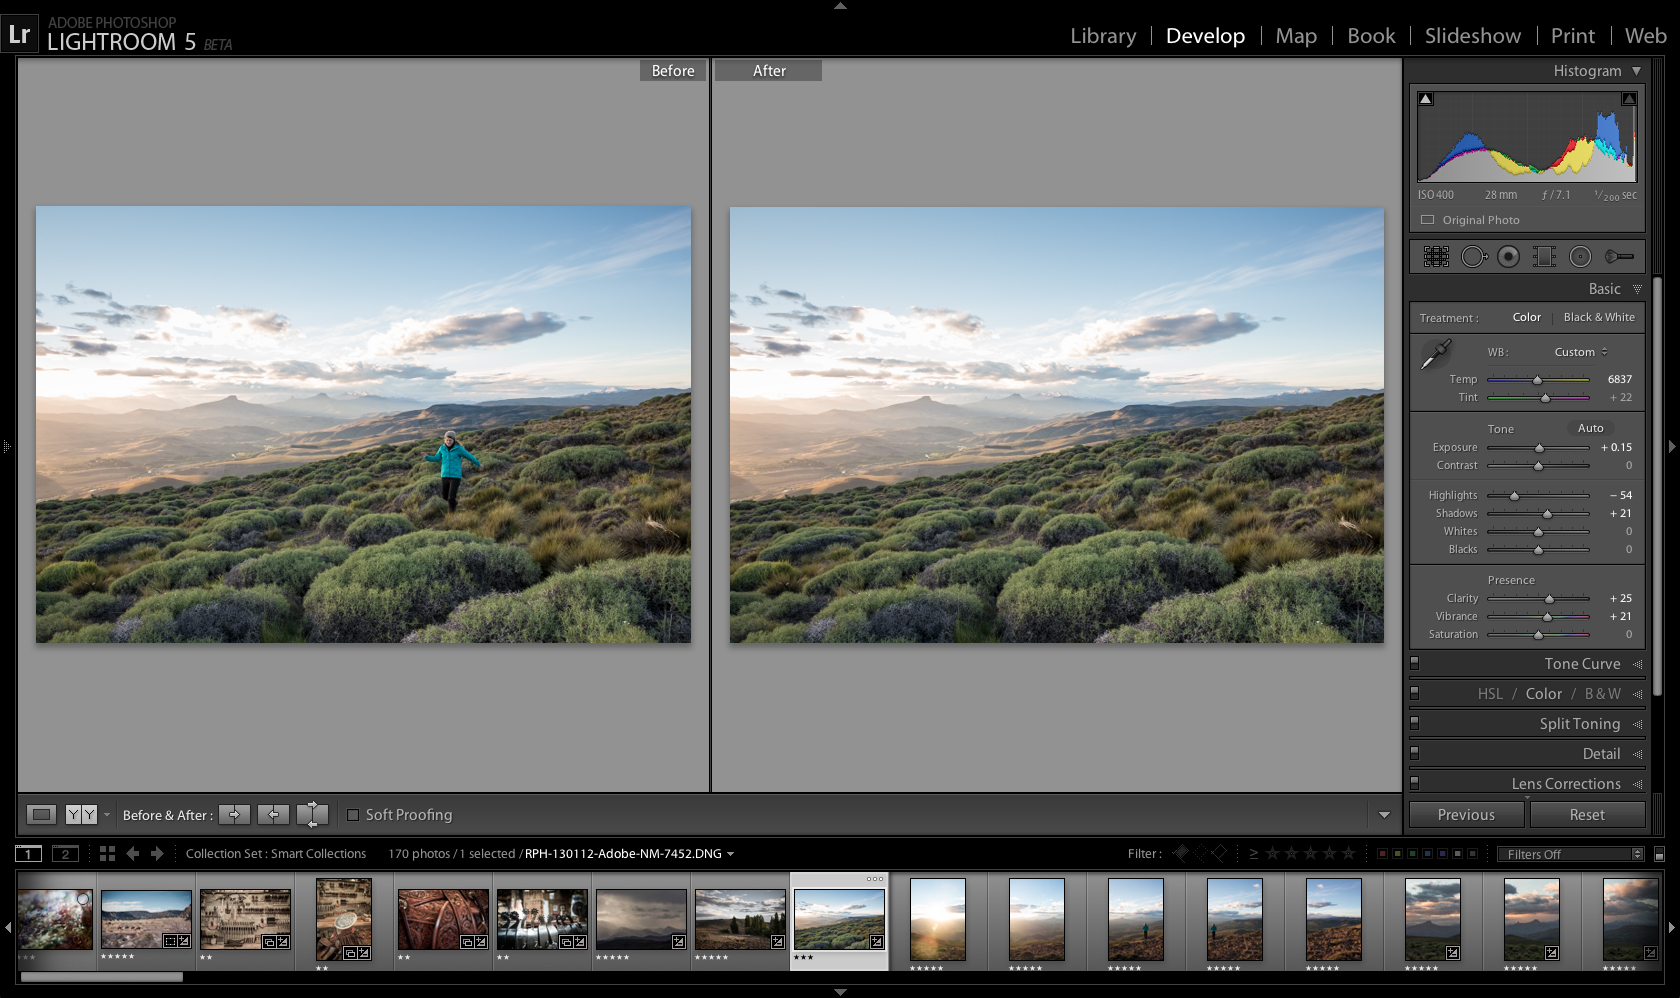 Adobe Photoshop Lightroom CC V6.10.1 Patch [Mac OSX] Serial Key Keygen